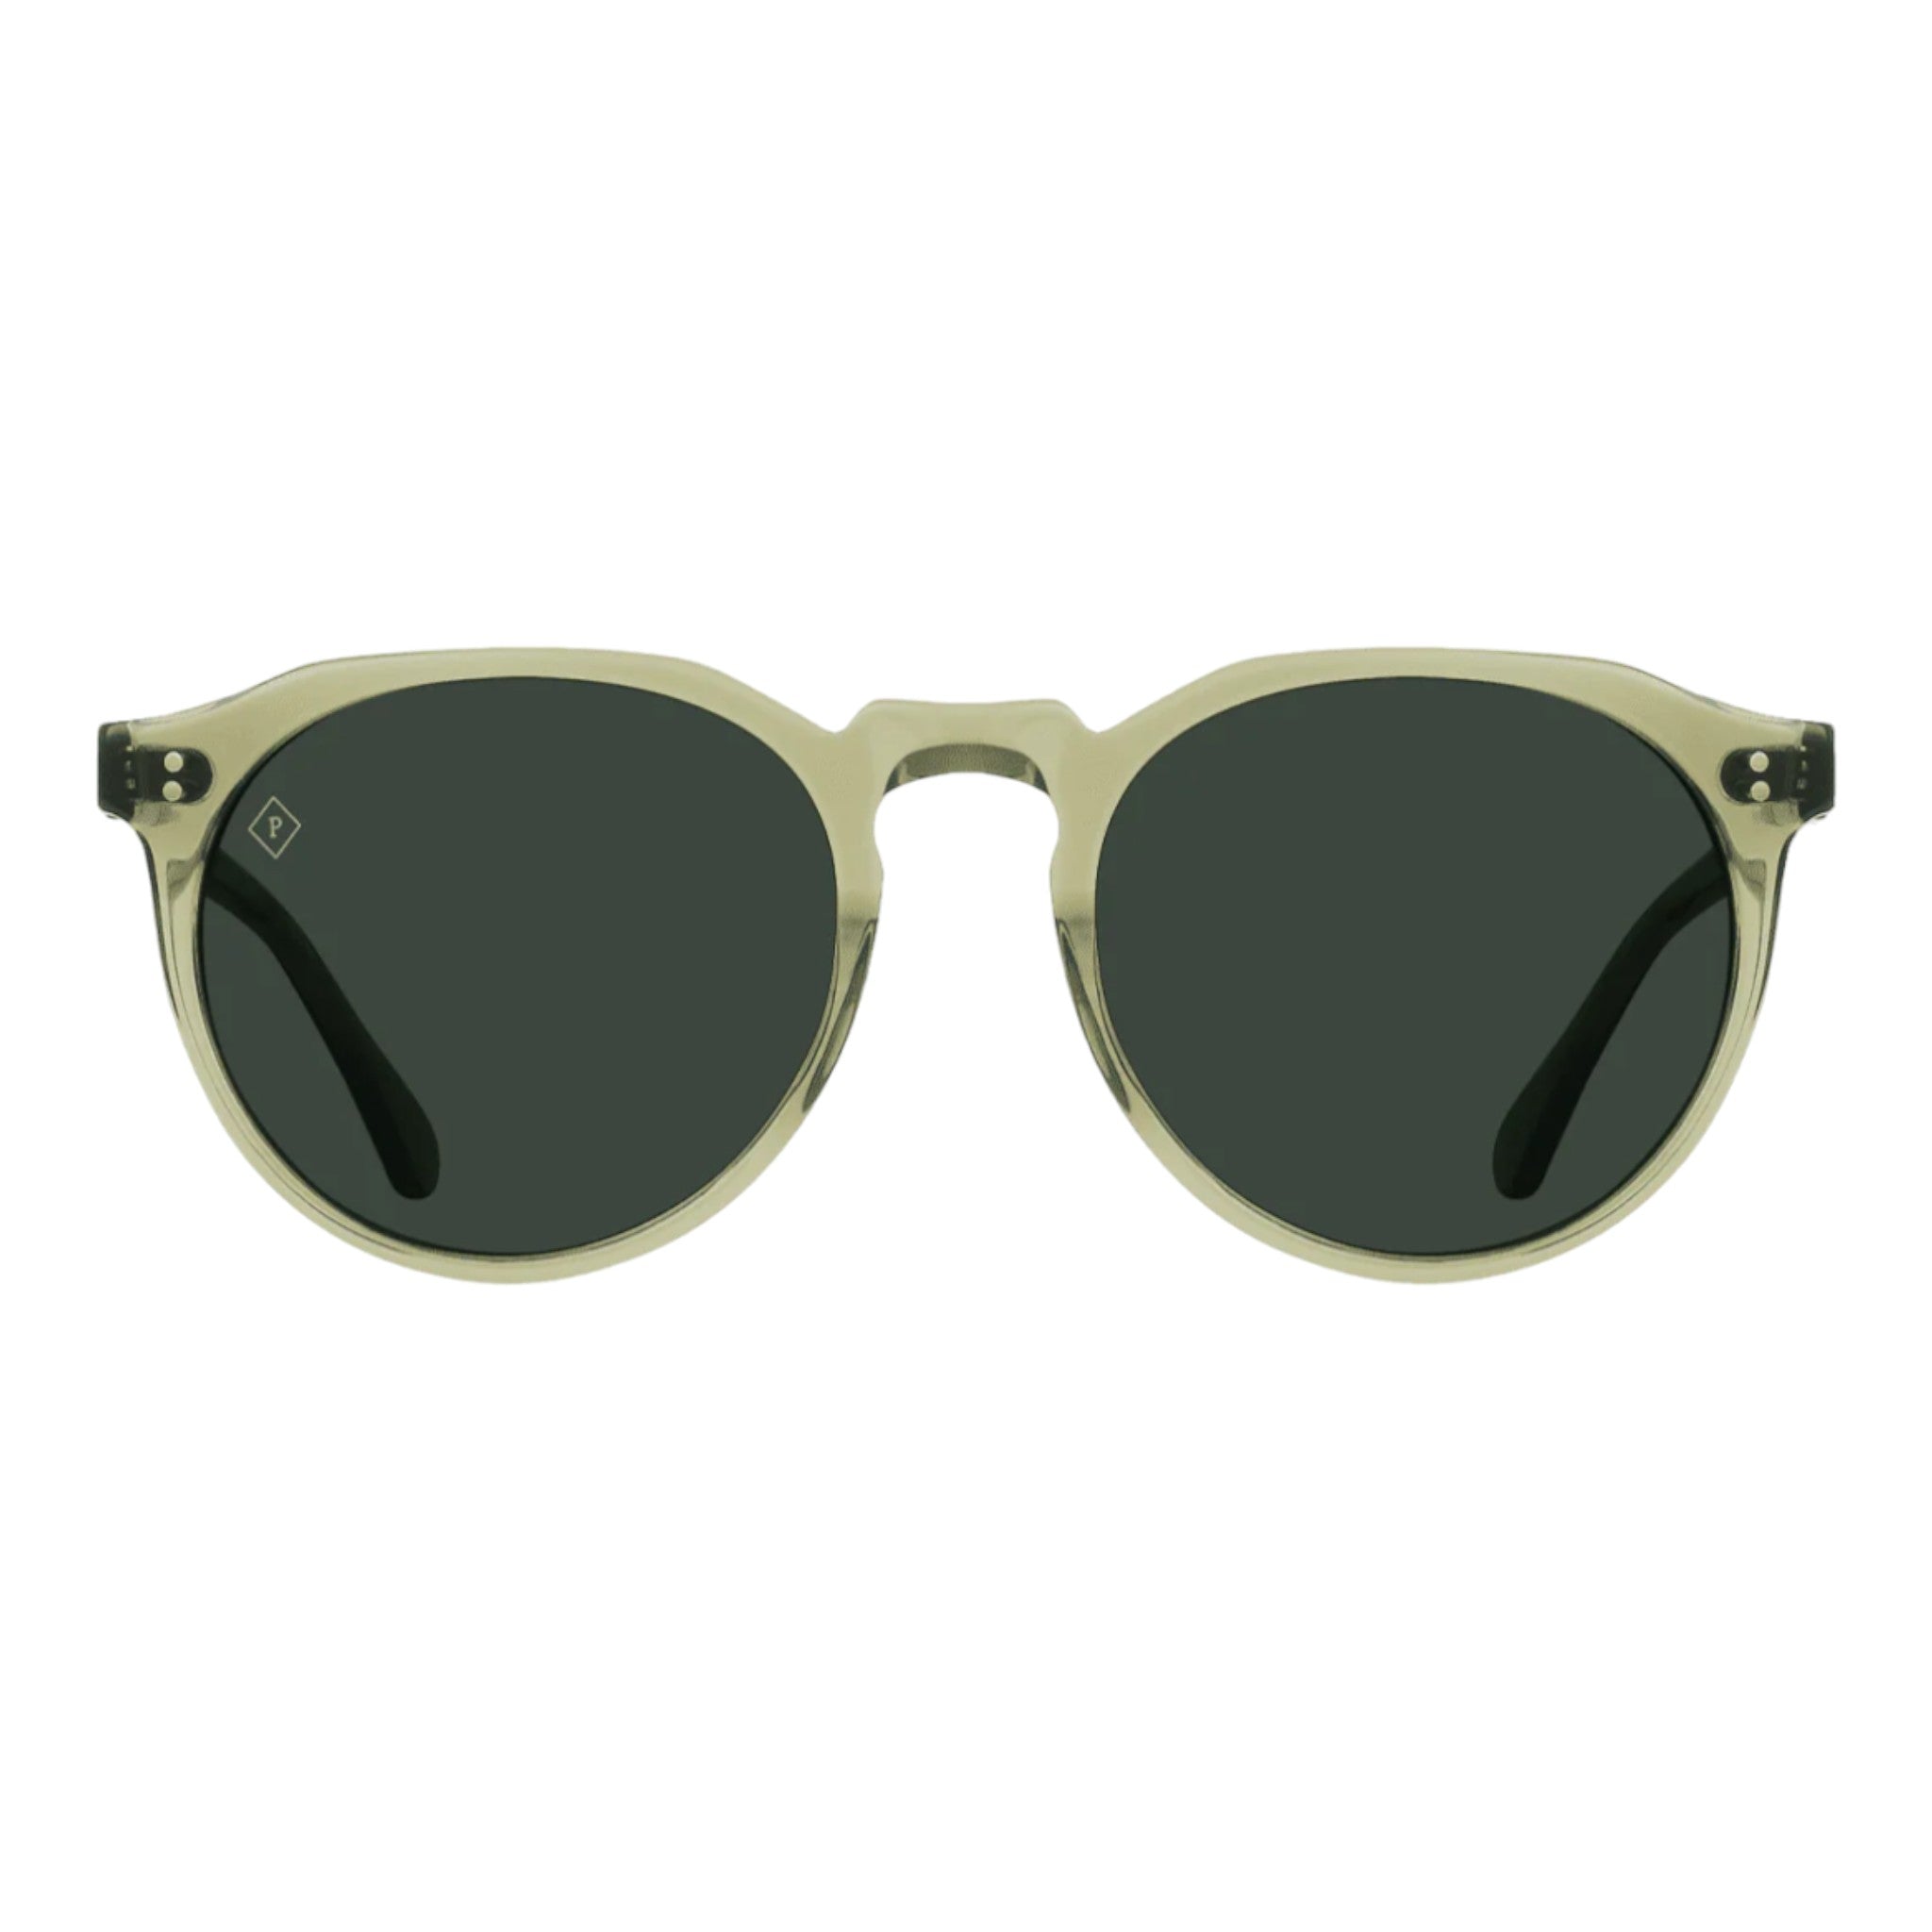 Raen - Remmy 52 Sunglasses - Cambria / Green Polarized